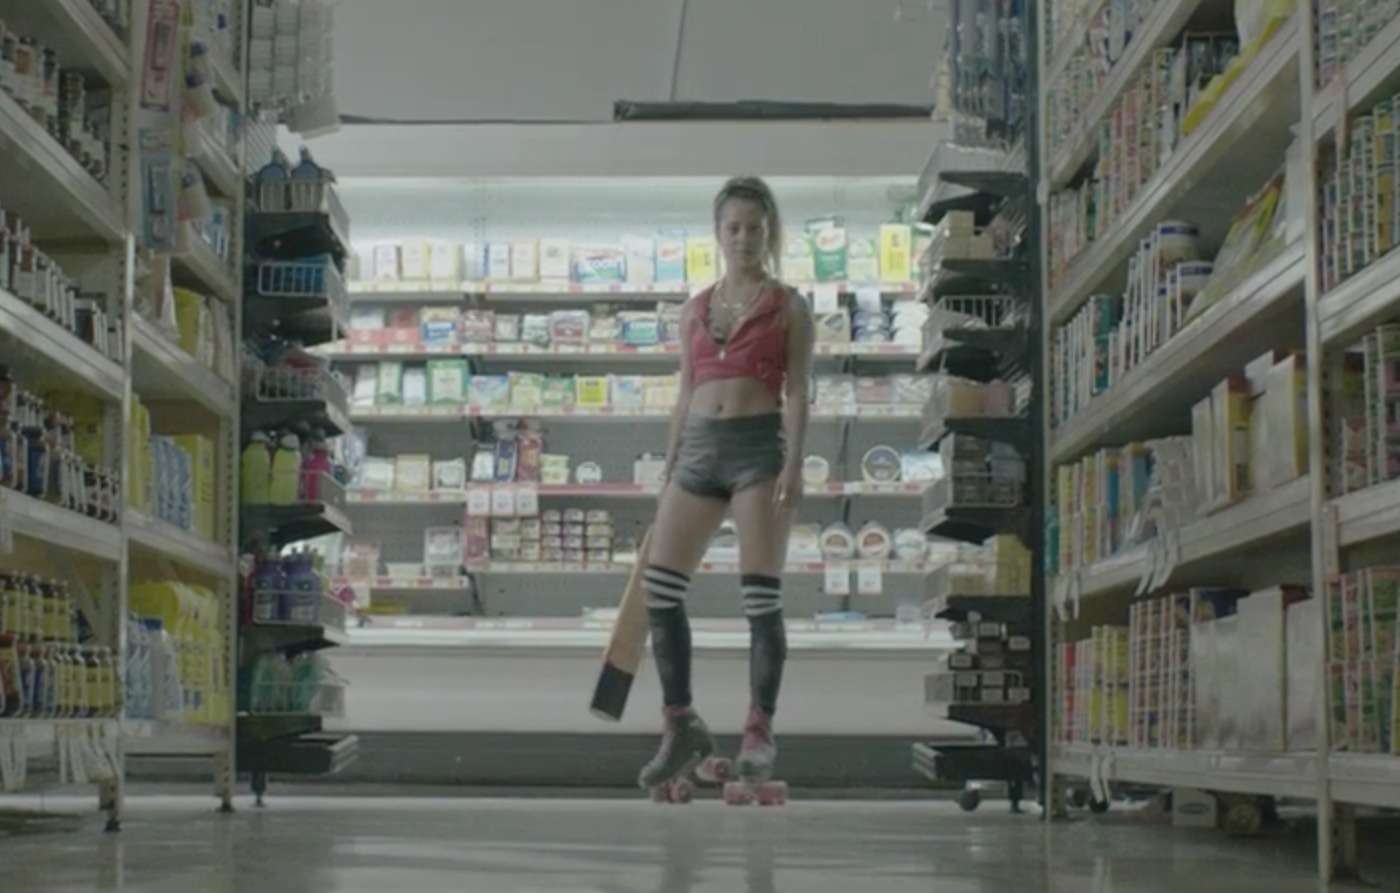 "Shopping In a Zombie Apocalypse" An Astounding New Short